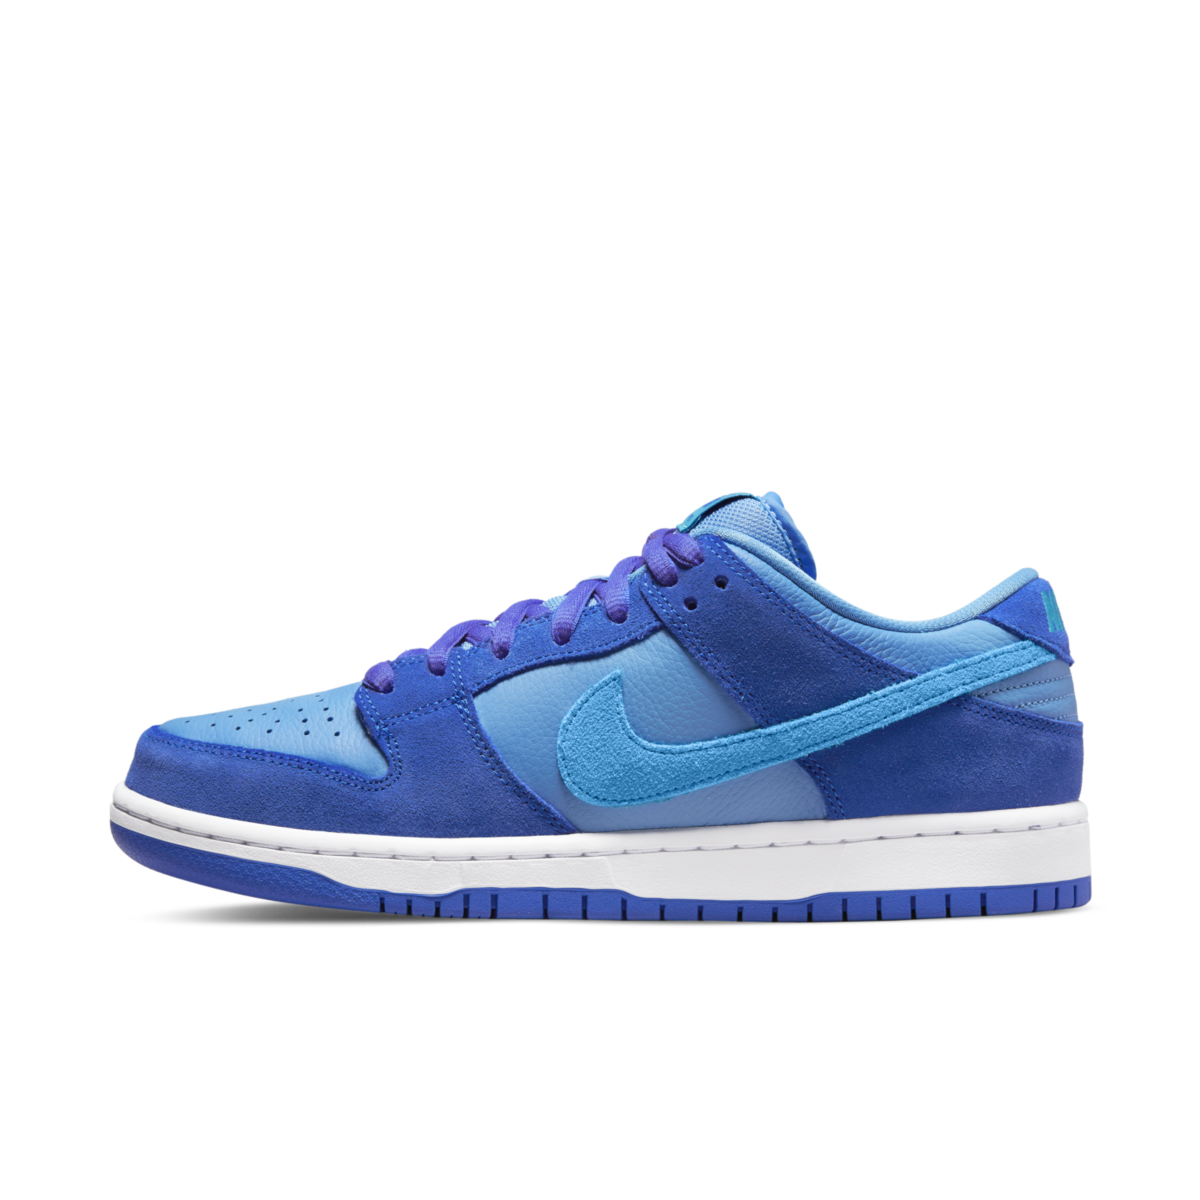 Nike SB Dunk Low 'Blue Raspberry' - Fruity Pack DM0807-400